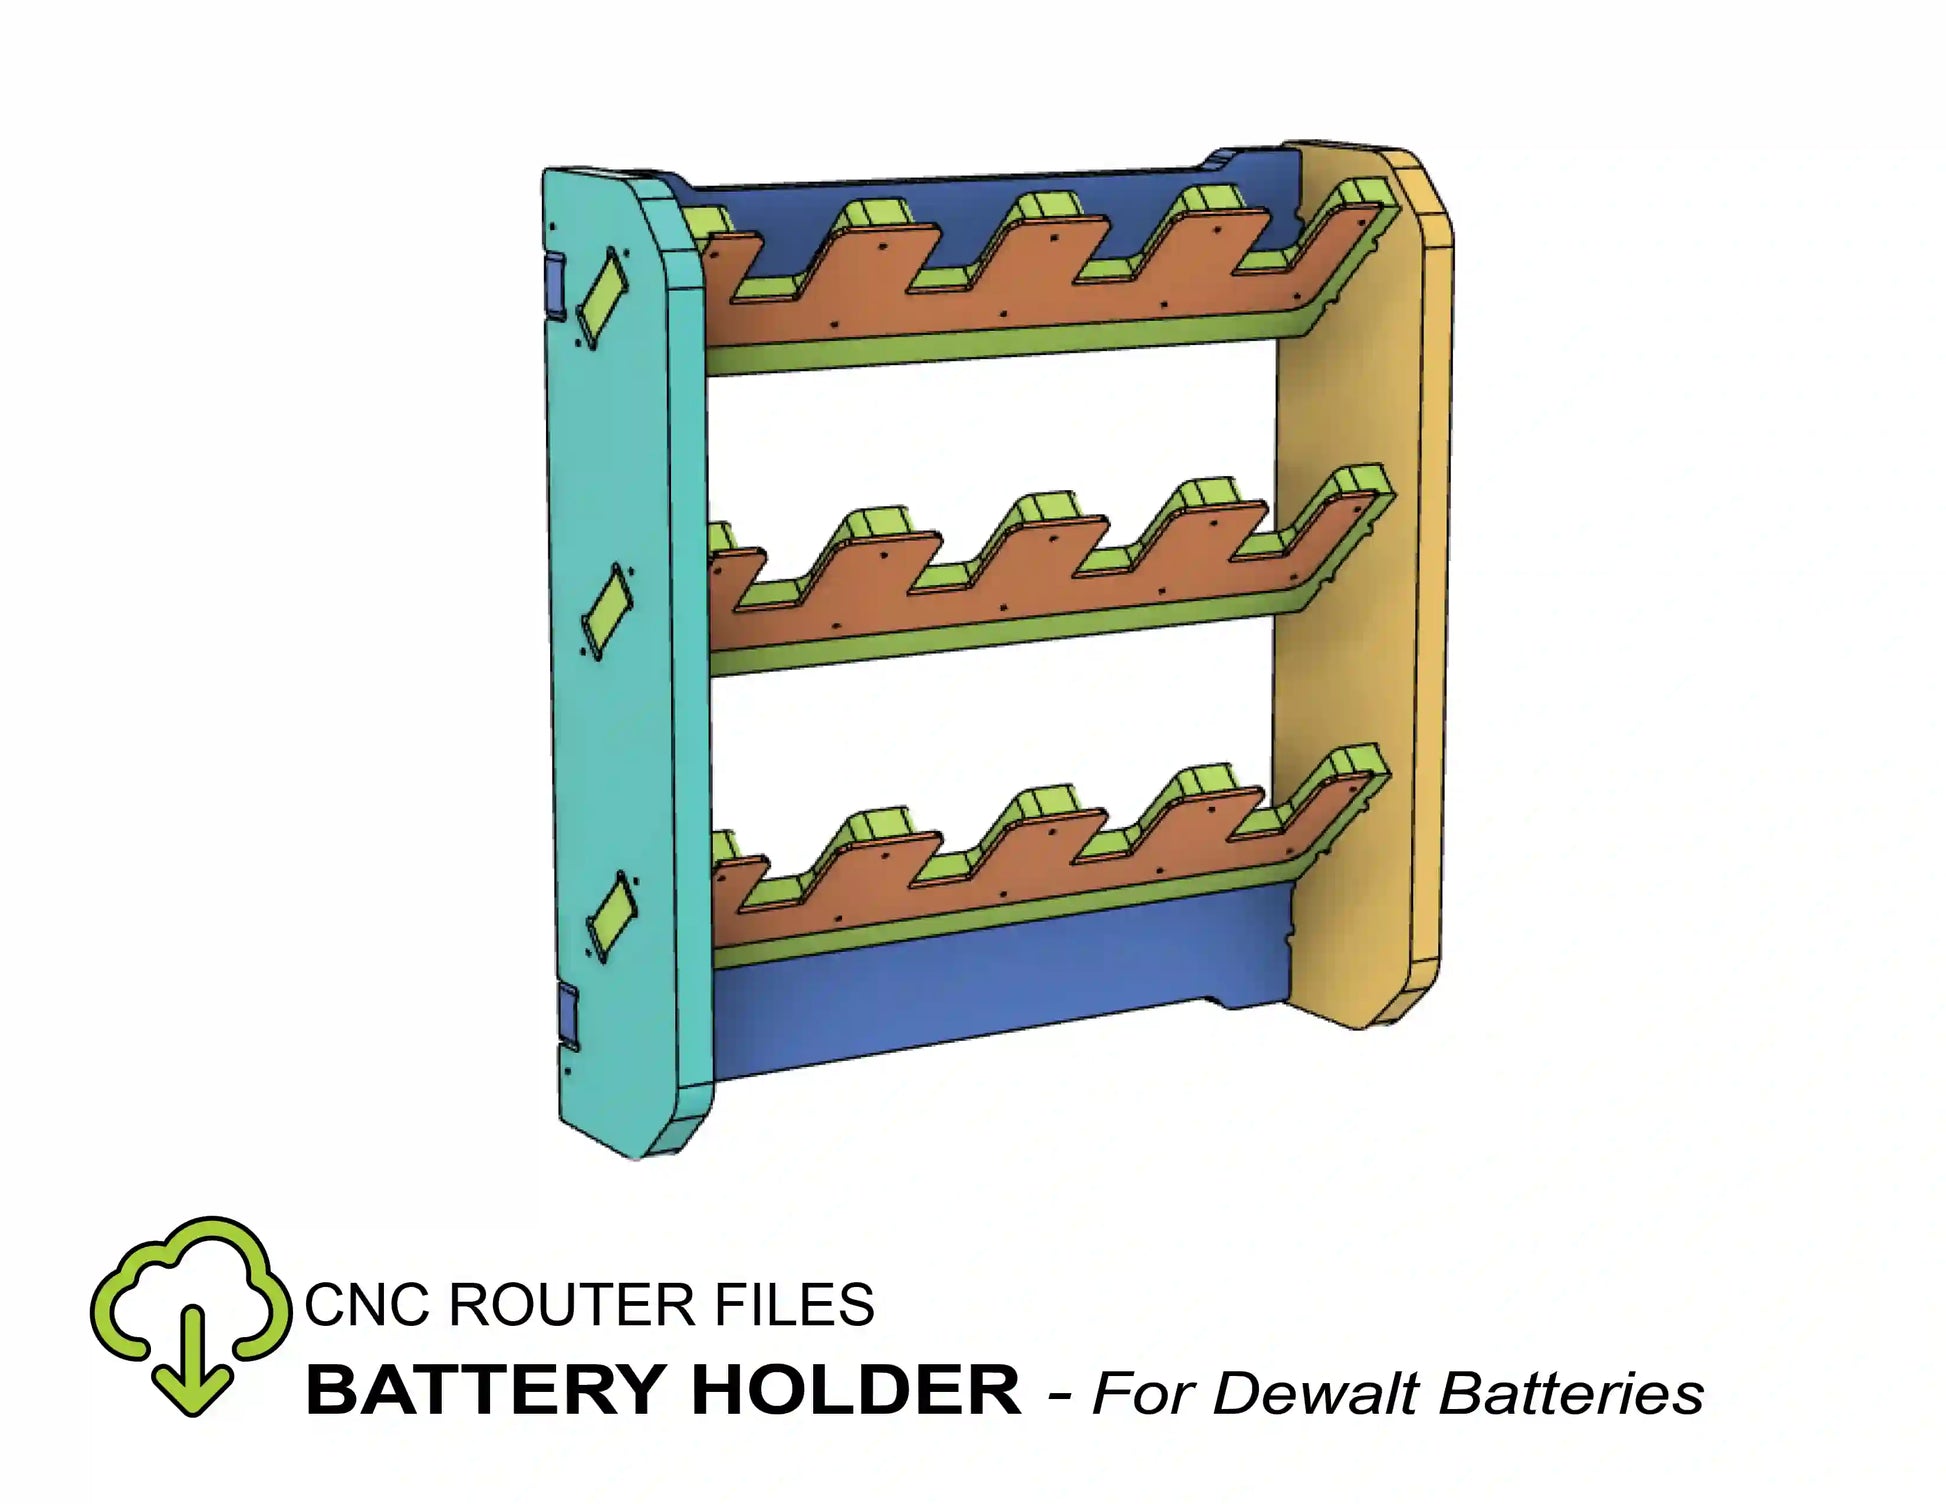 dewalt batttery tool organizer that stores 12 dewalt 20 volt batteries on a wall mounted battery holder rack